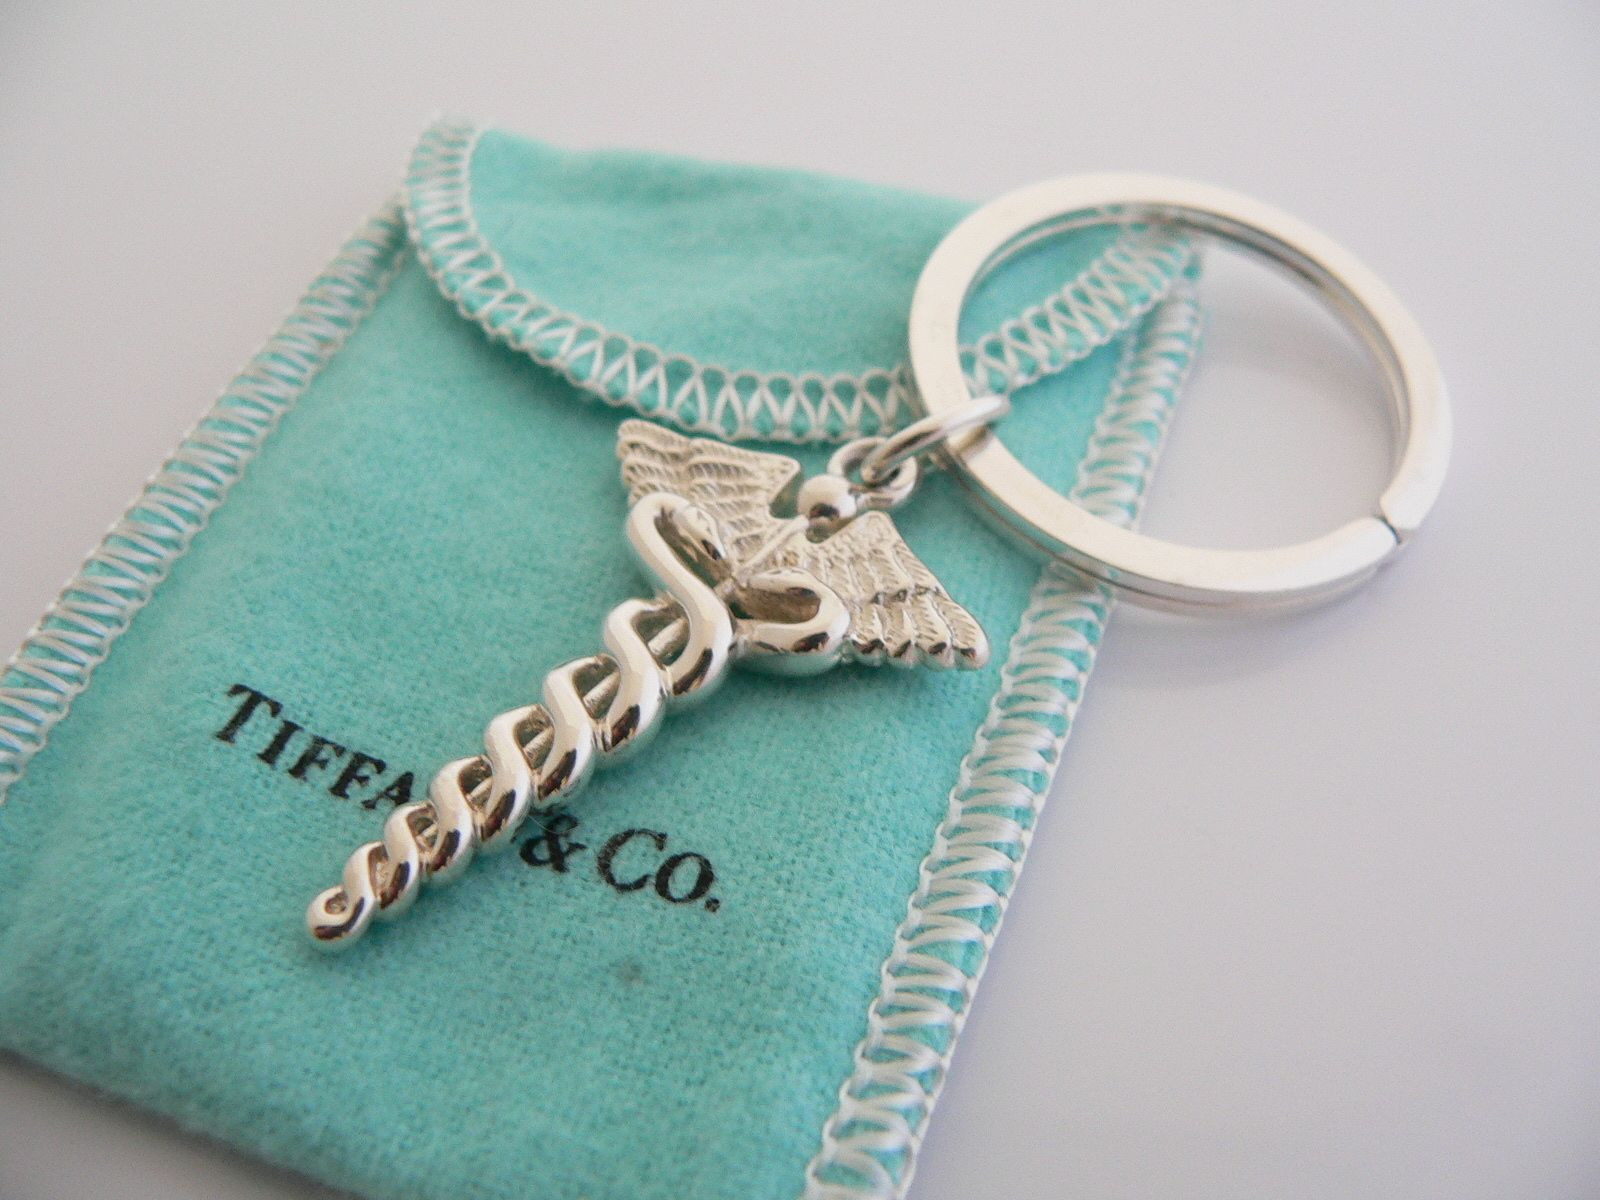 Rn Graduation Gift Ideas
 Beautiful Tiffany & Co Keychain Great idea for grad